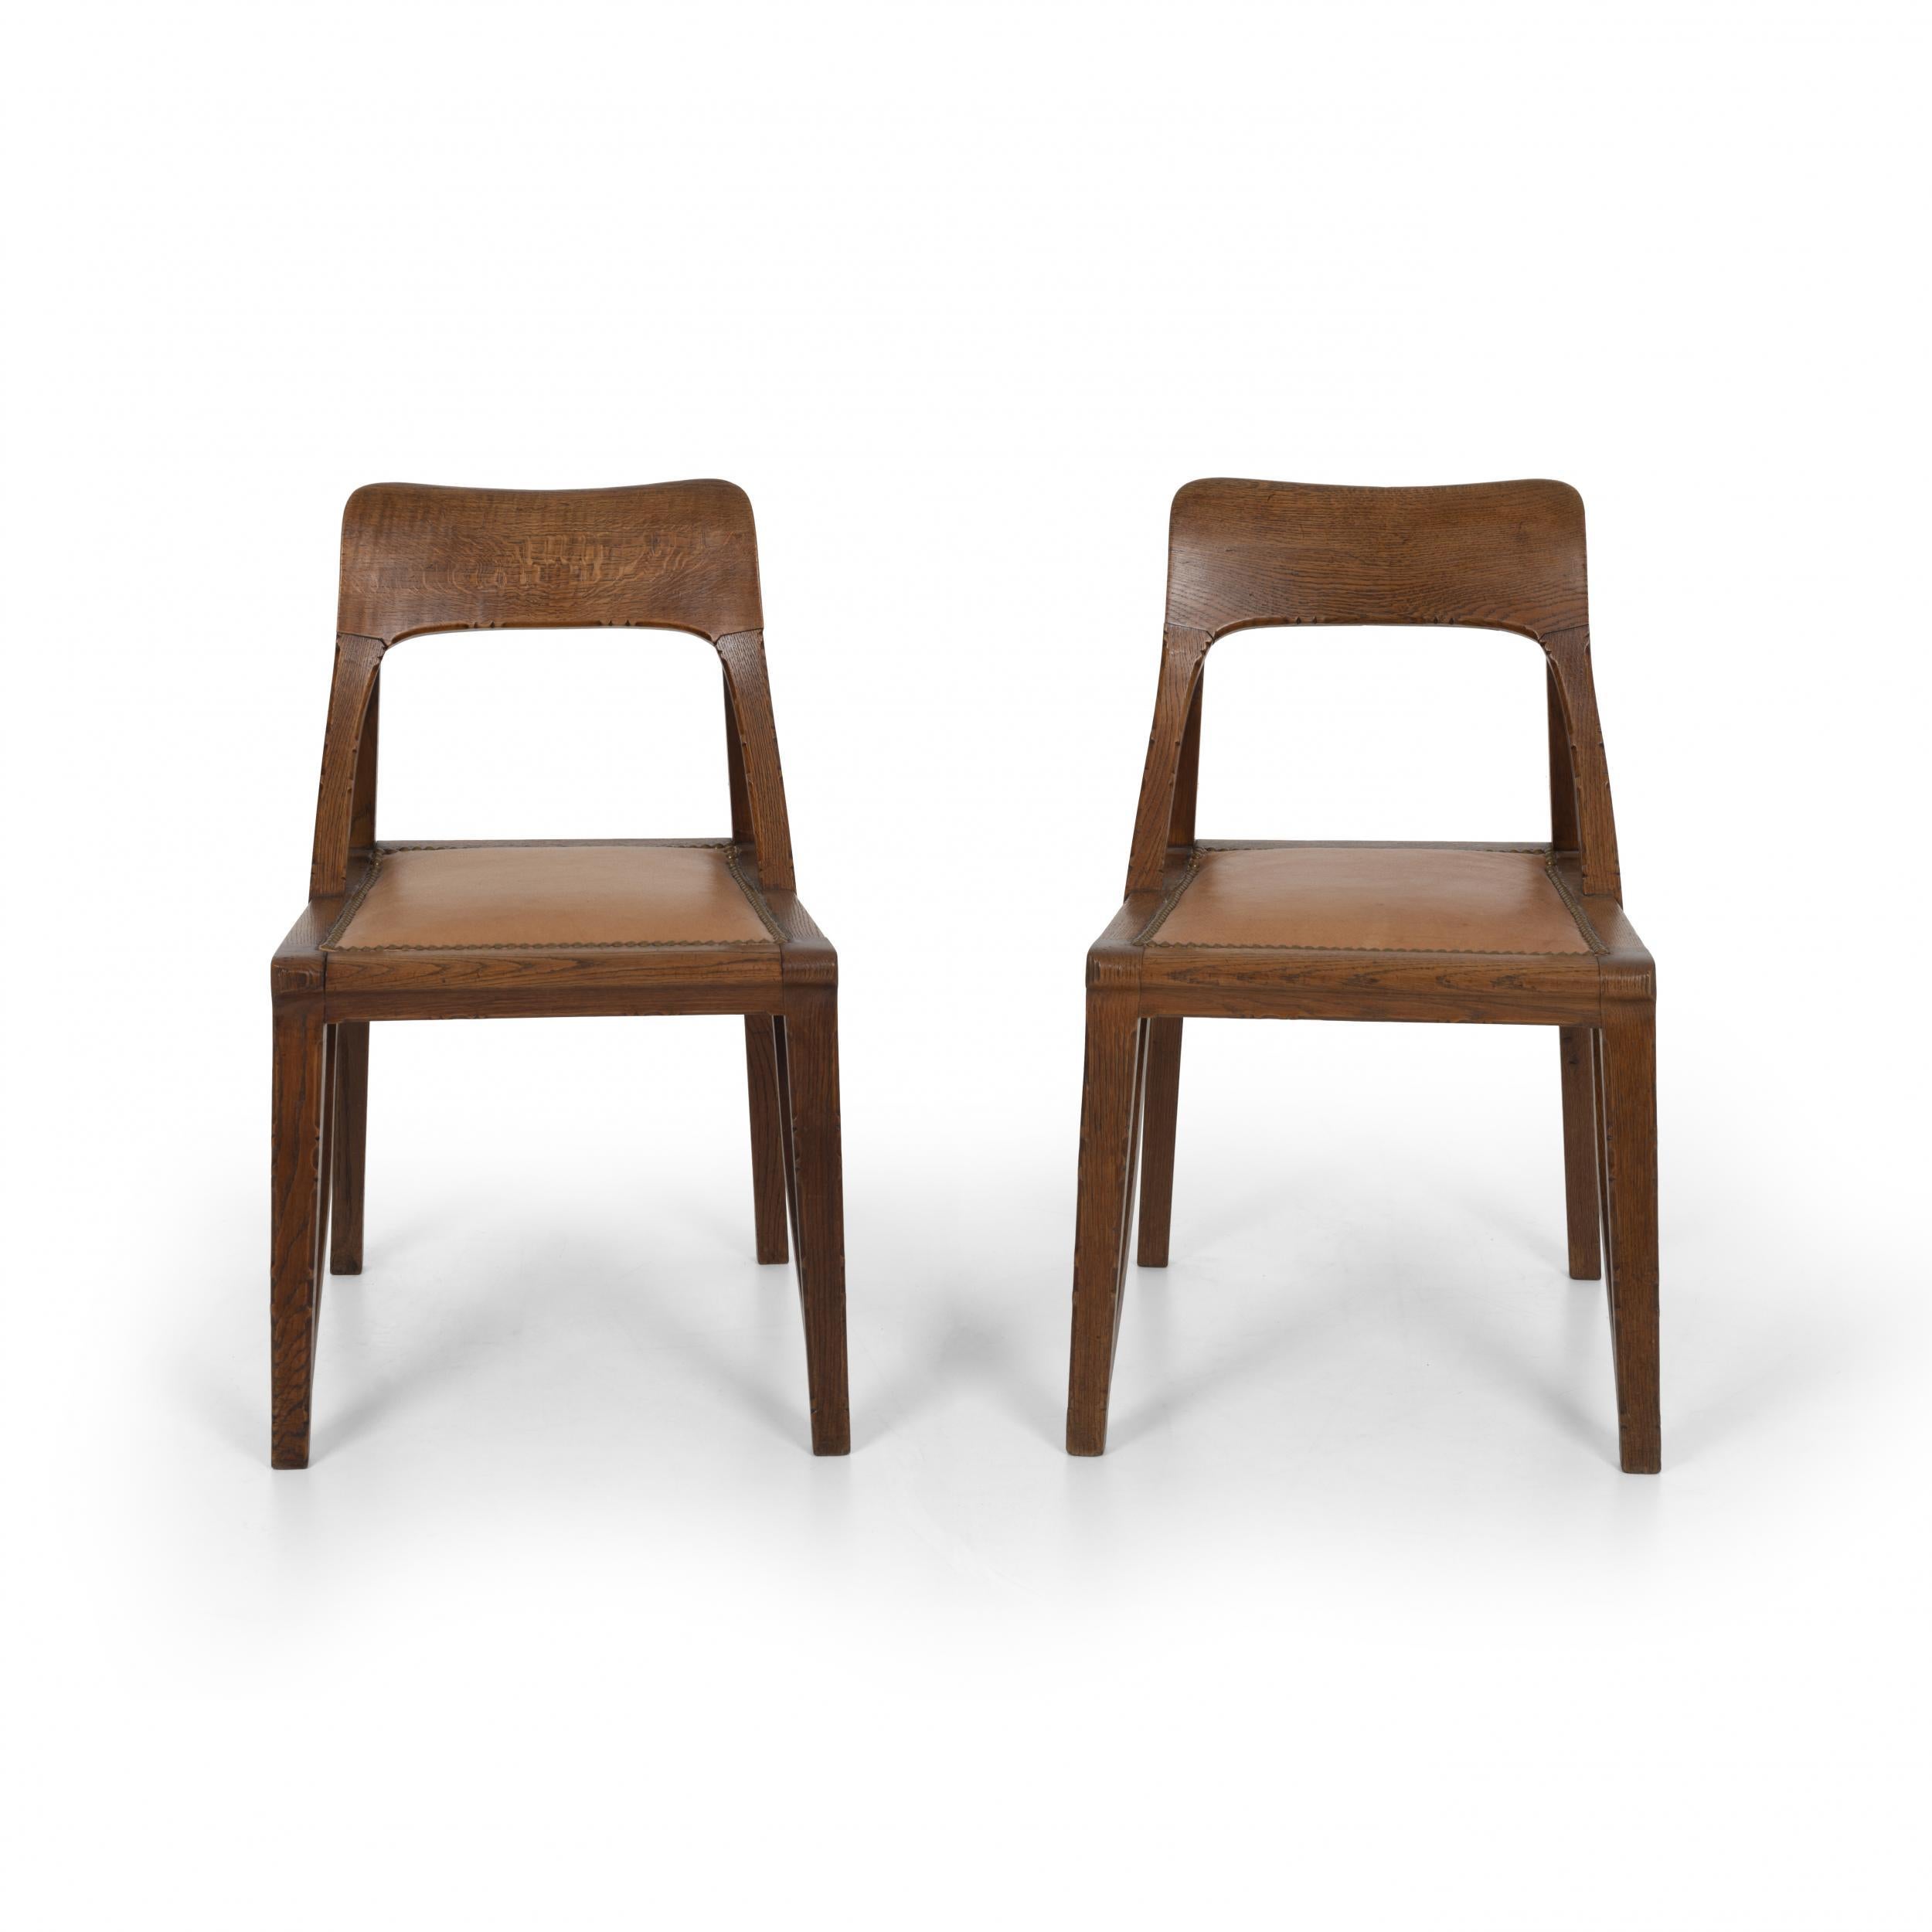 Pair of Riemerschmidt armchairs for Liberty & Co., oak, upholstered seats.
 